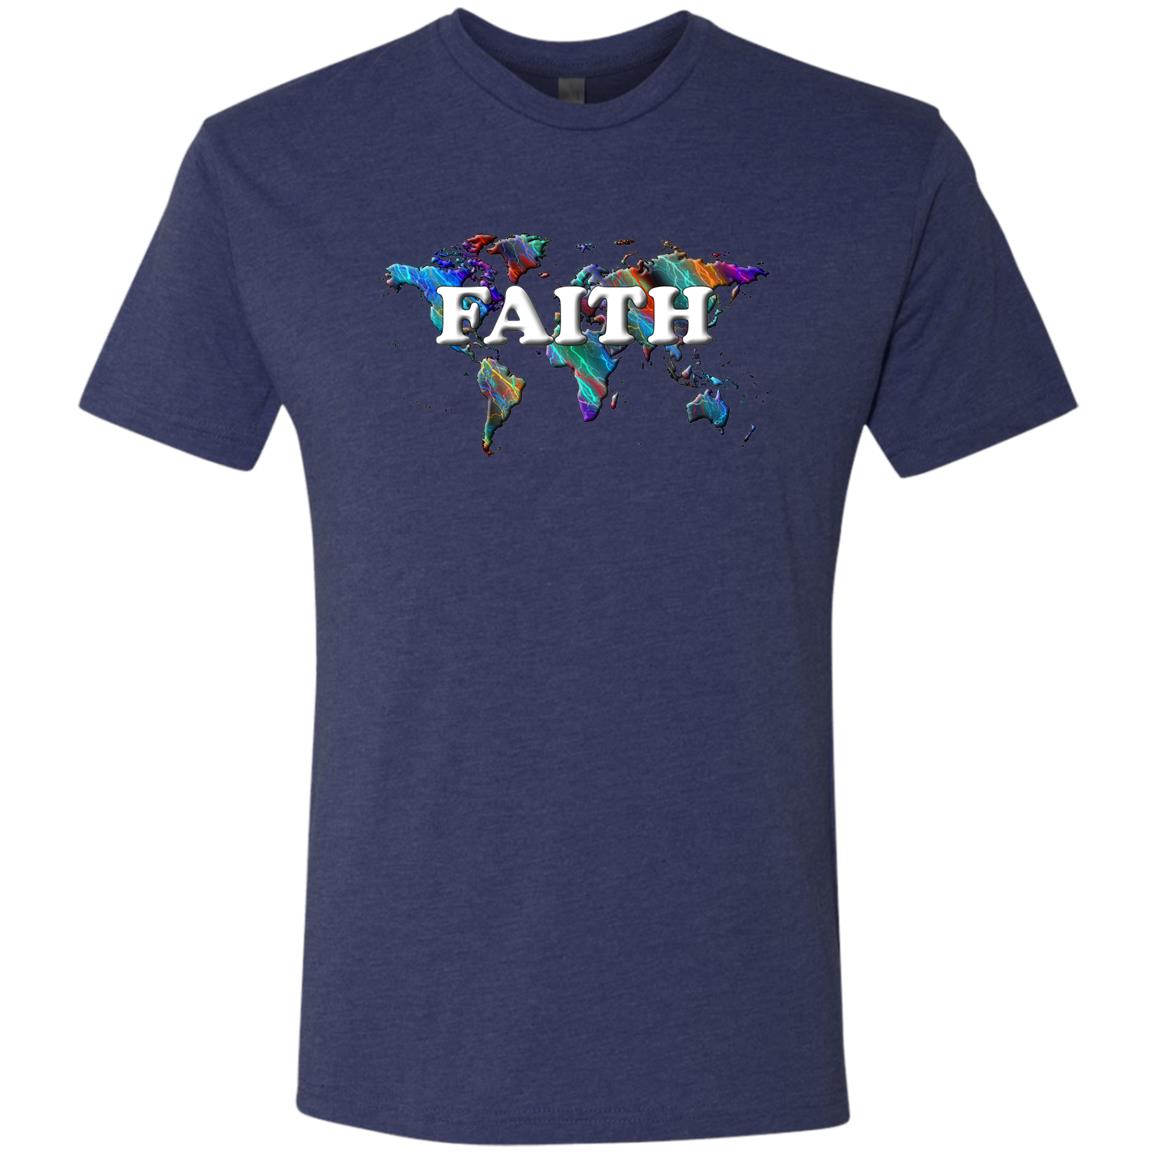 Faith Statement T-Shirt